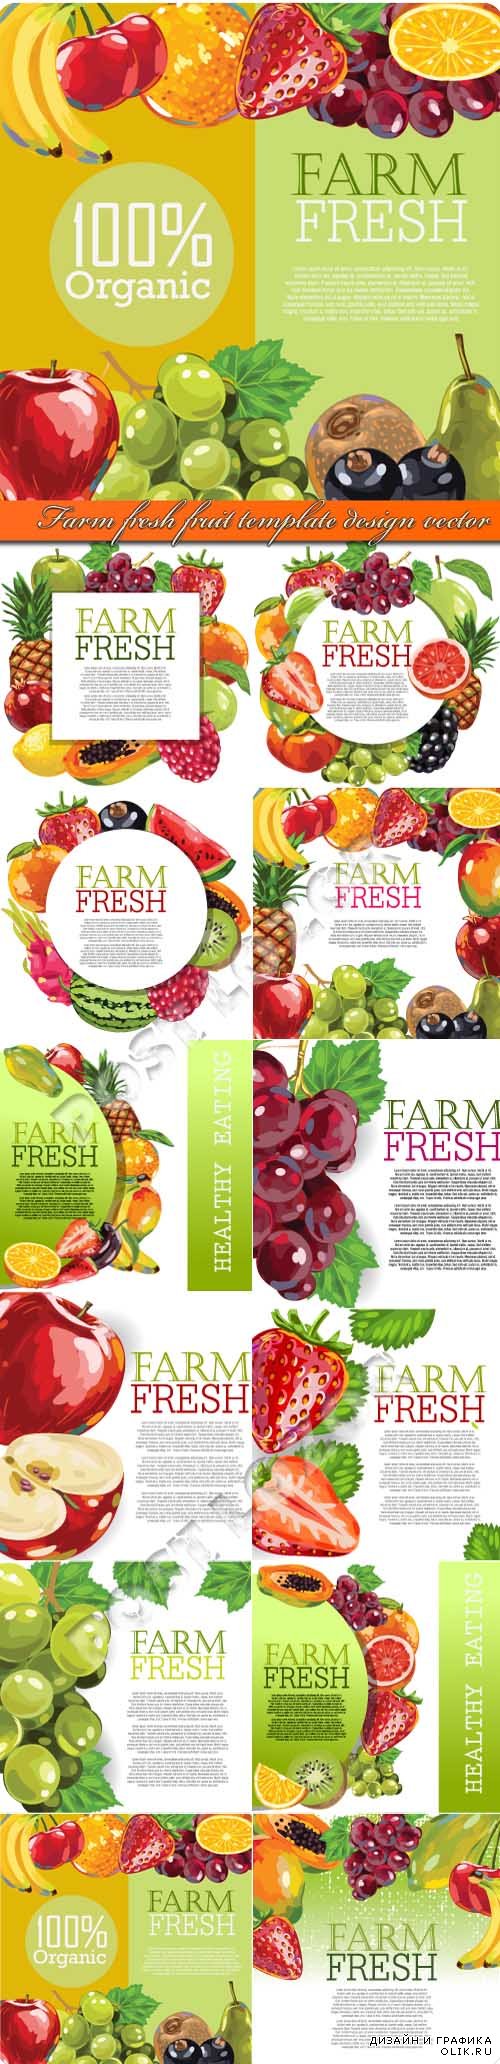 Farm fresh fruit template design vector